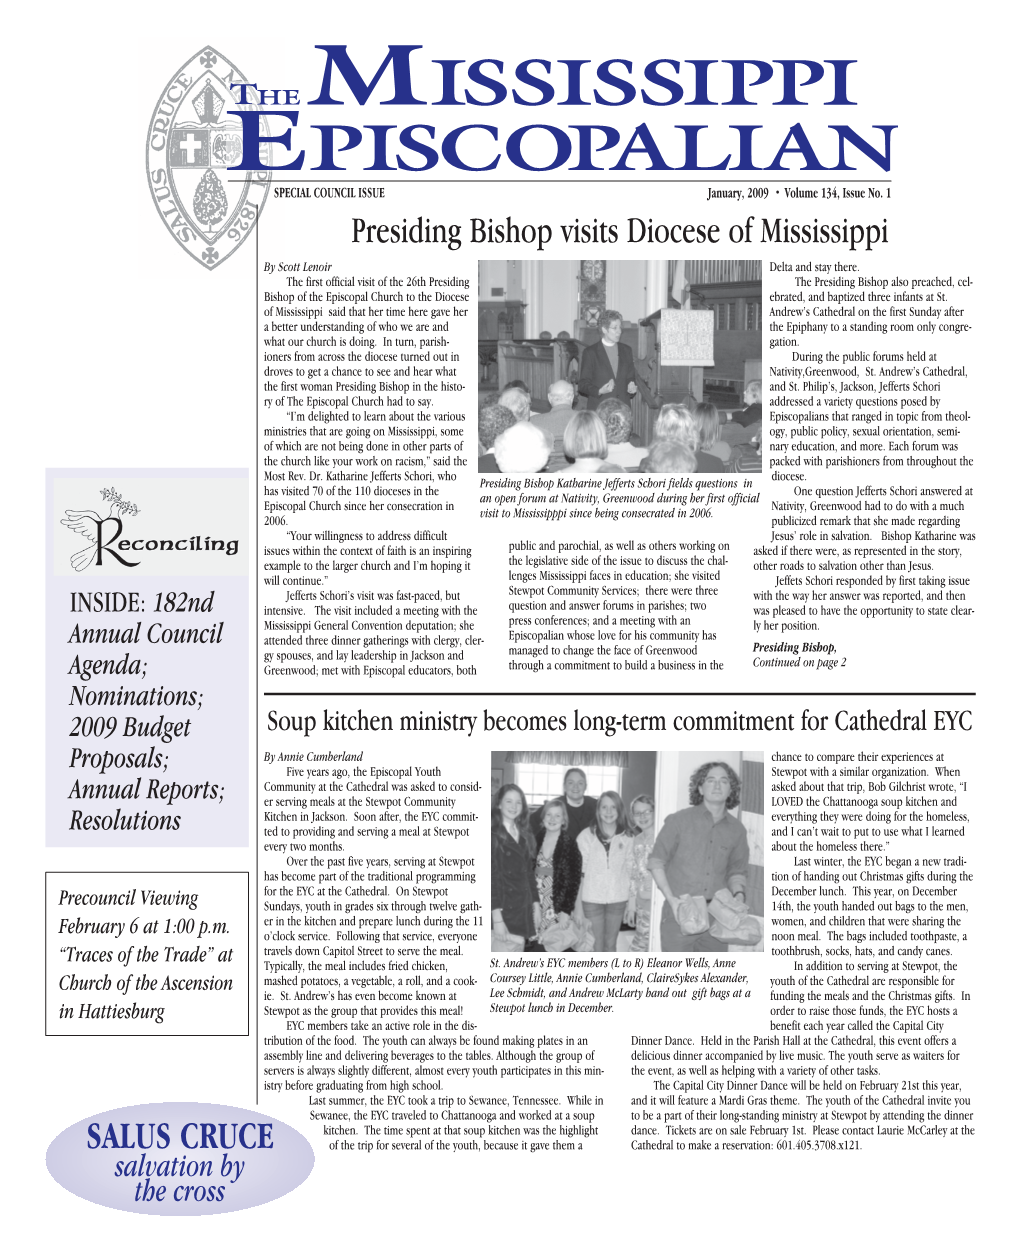 Episcopal Relief and Development